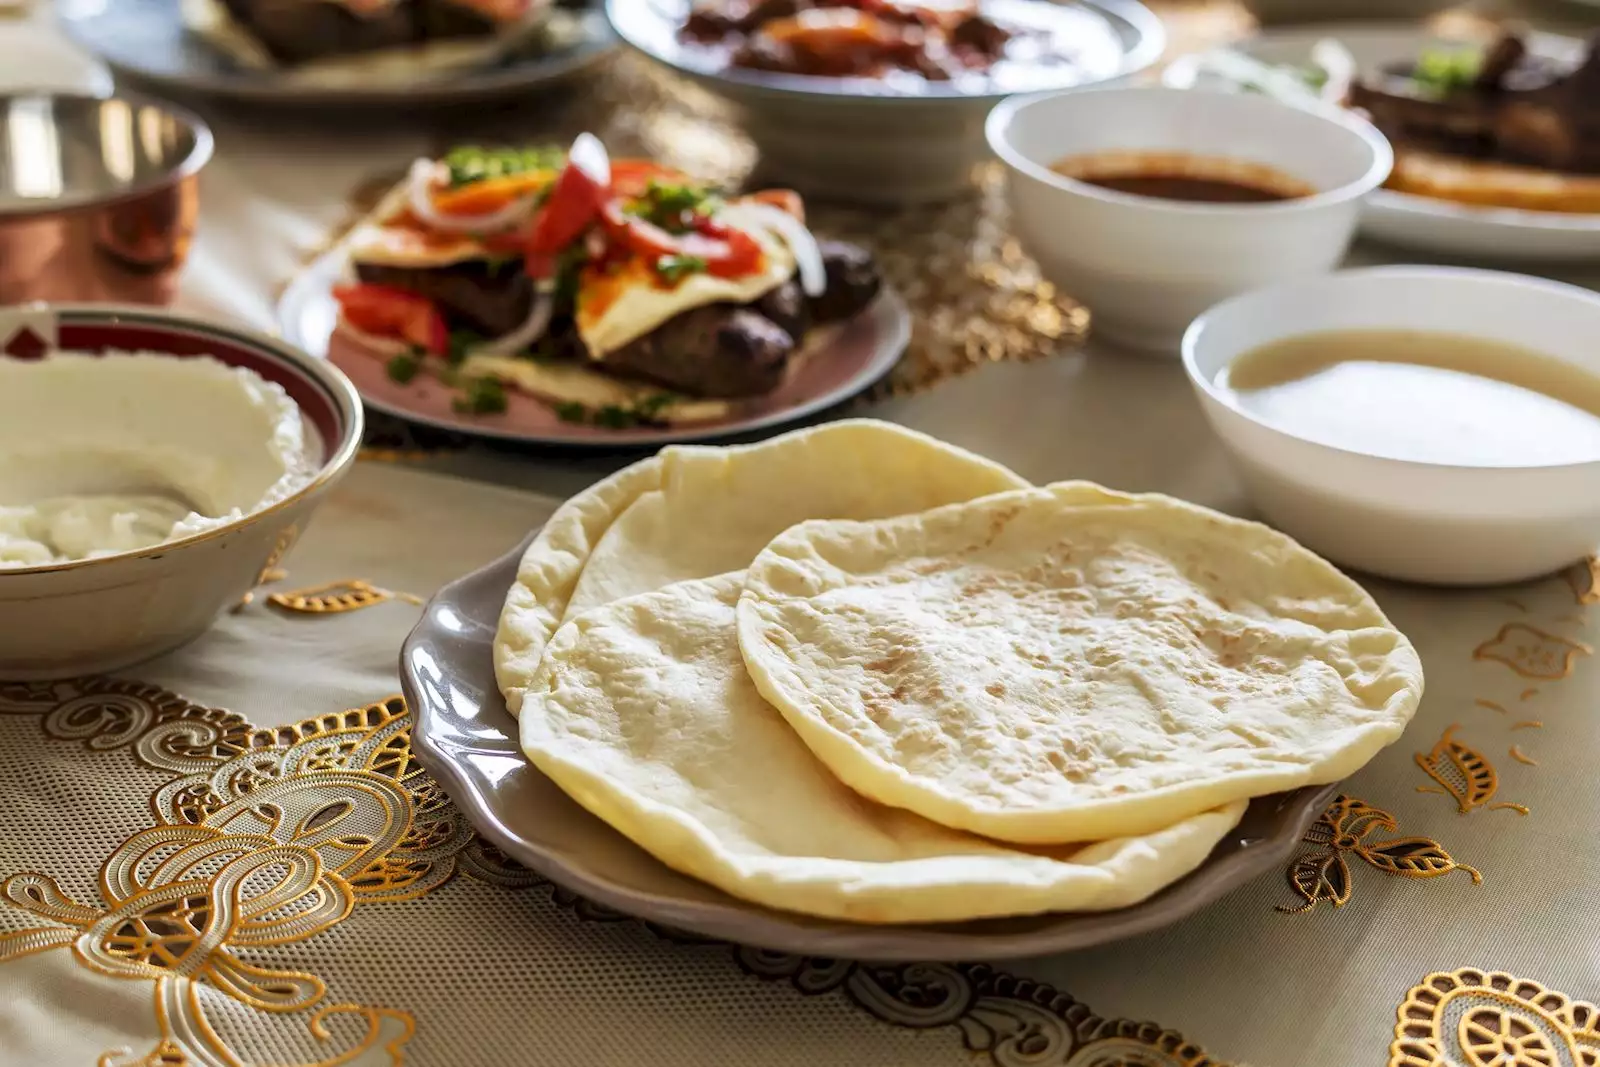 Lebanese food, Arabic specialties